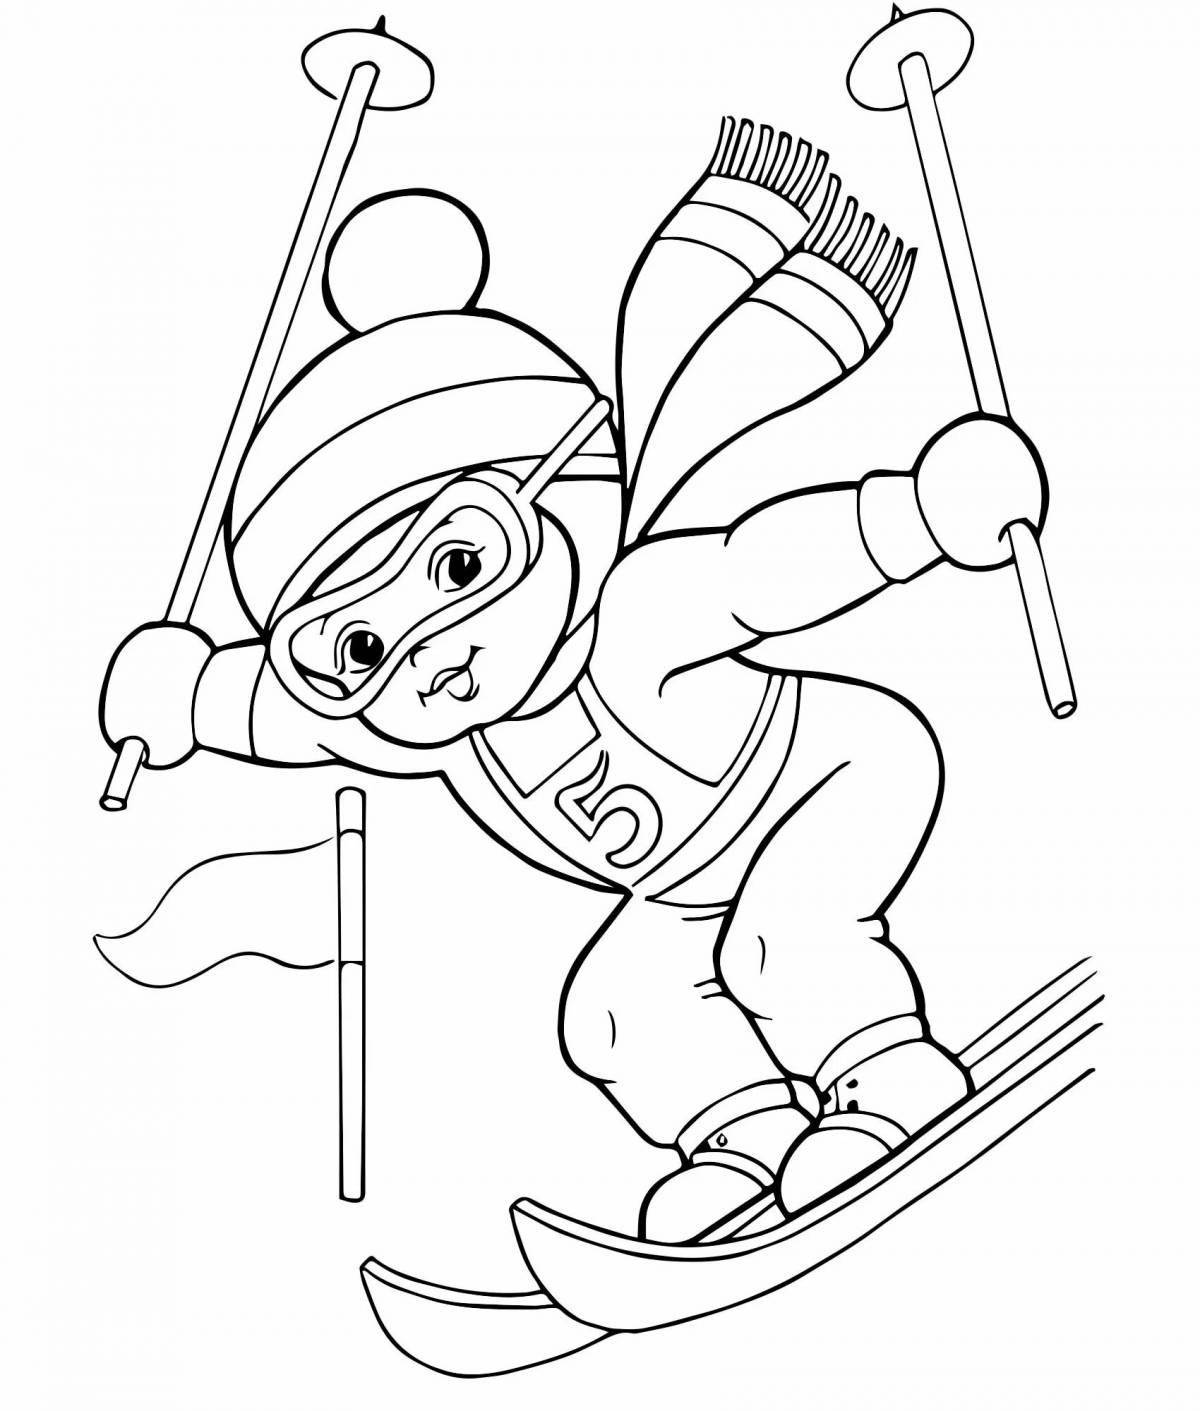 Skier for children 5 6 years old #8